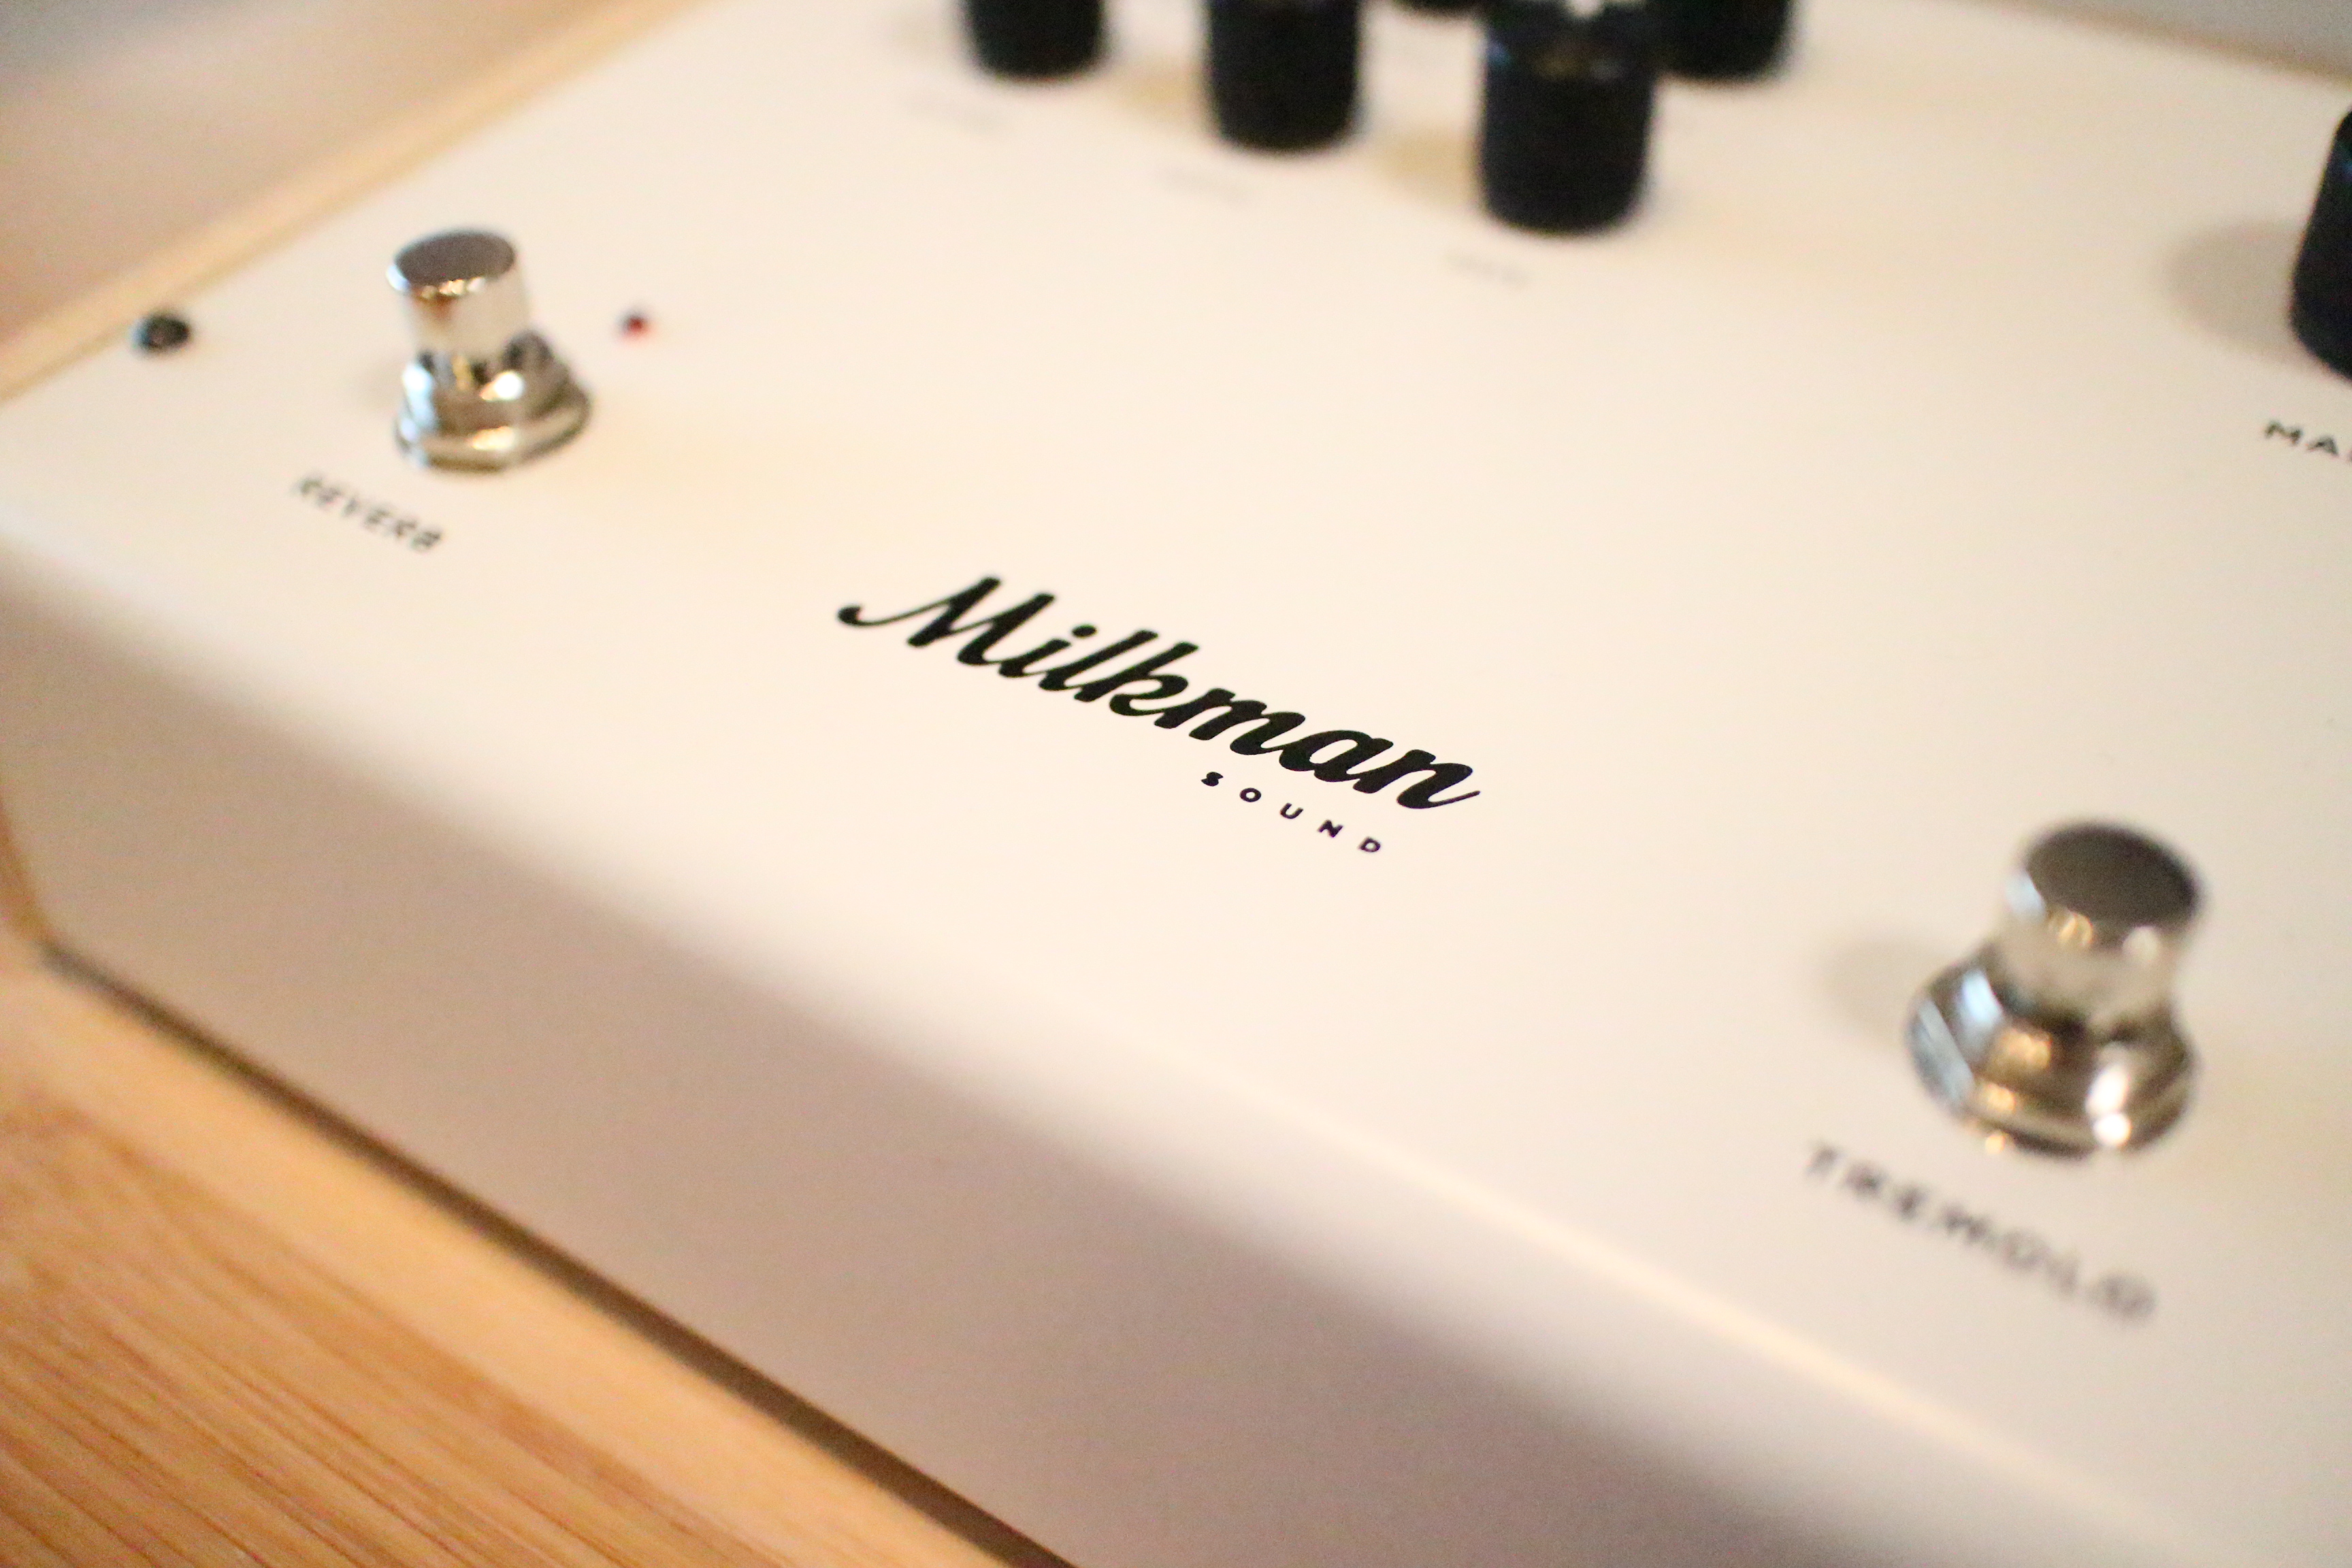 Milkman Sound】洗練された機能、ルックスのペダルタイプギターアンプヘッドが登場！国内池部楽器店独占販売！ | こちらイケベ新製品情報局